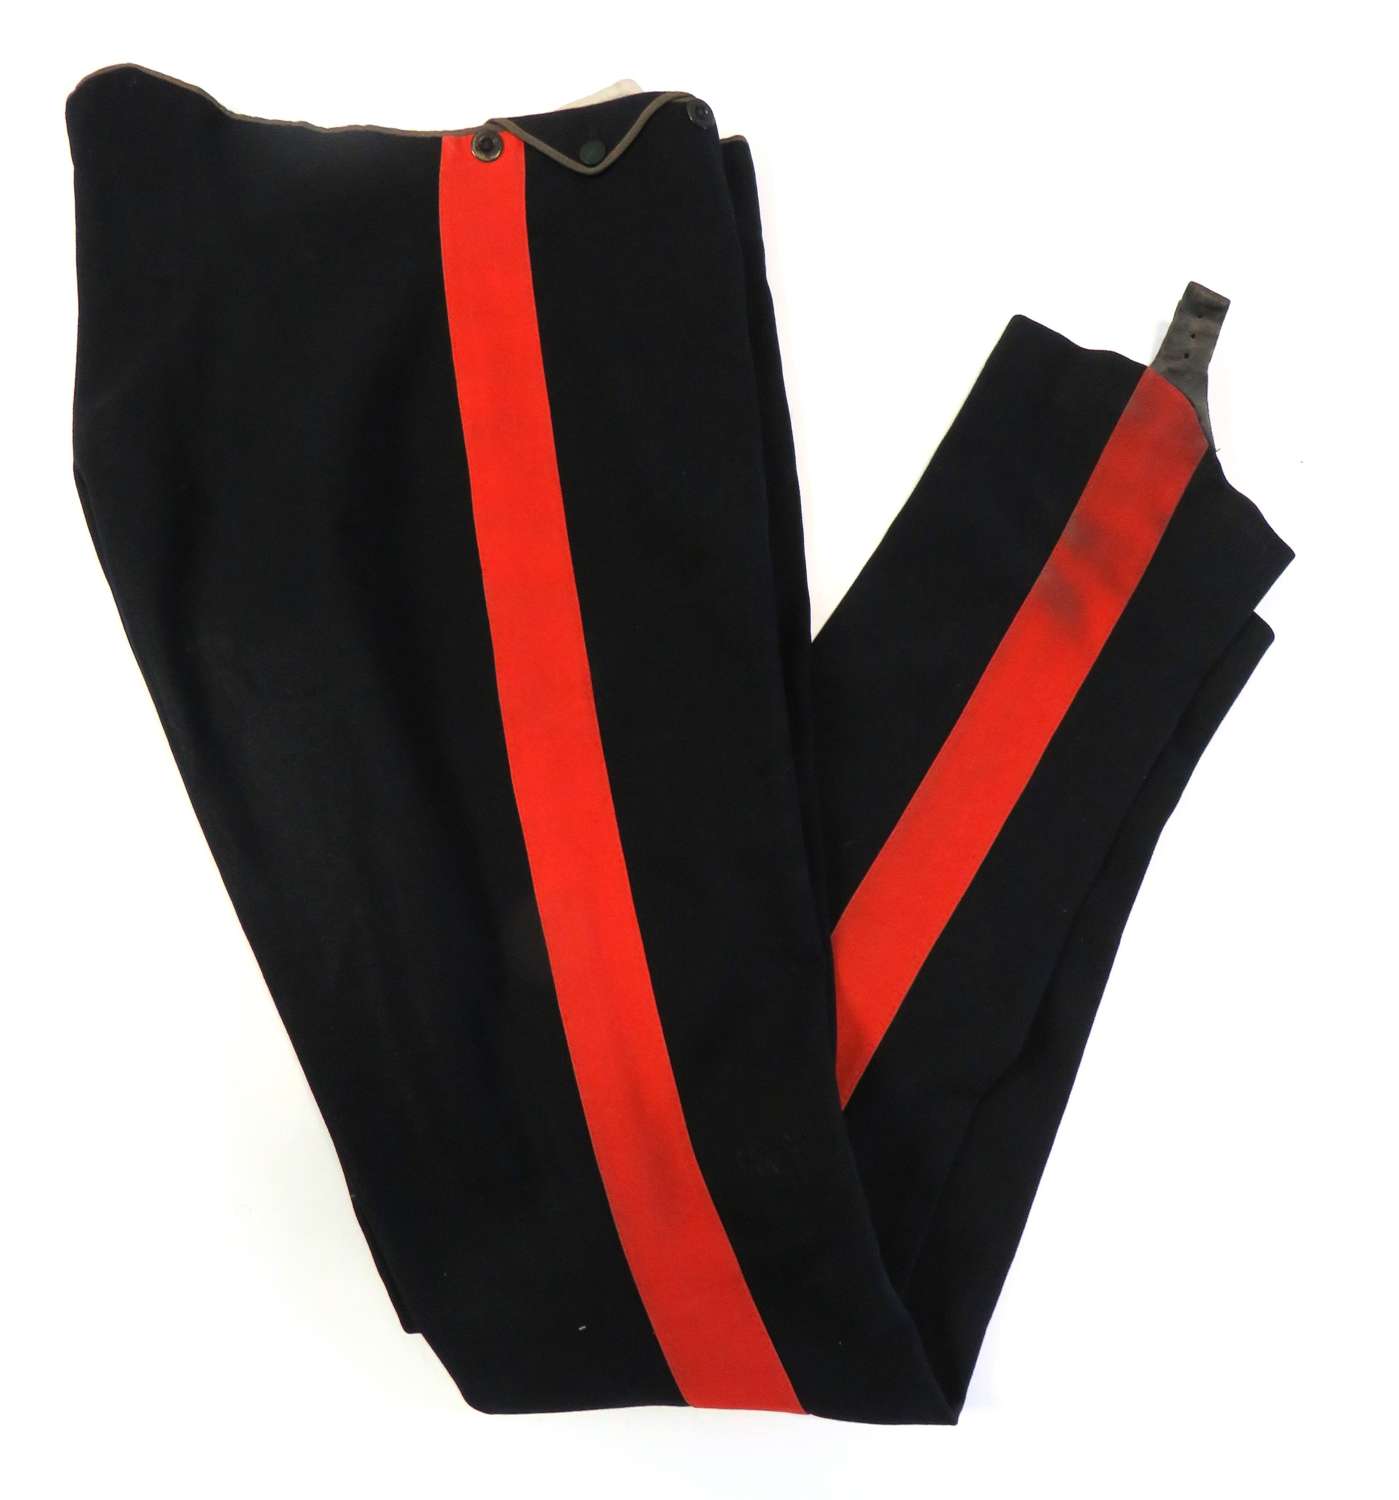 Interwar Officers Named Dress Trousers